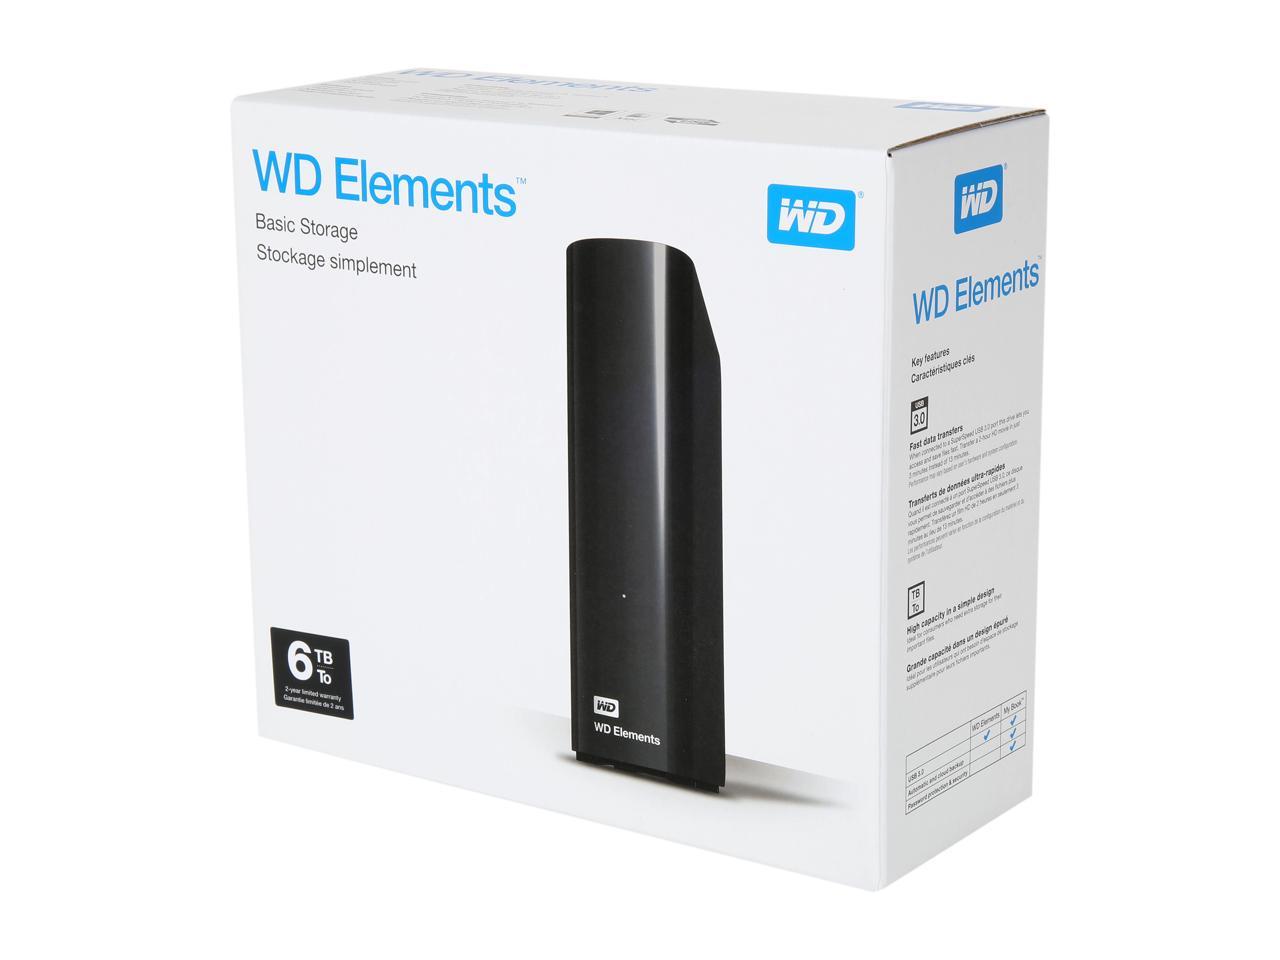 Wd Elements 6Tb Usb 3.0 Desktop Hard Drive Black Wdbwlg0060Hbk-Nesn